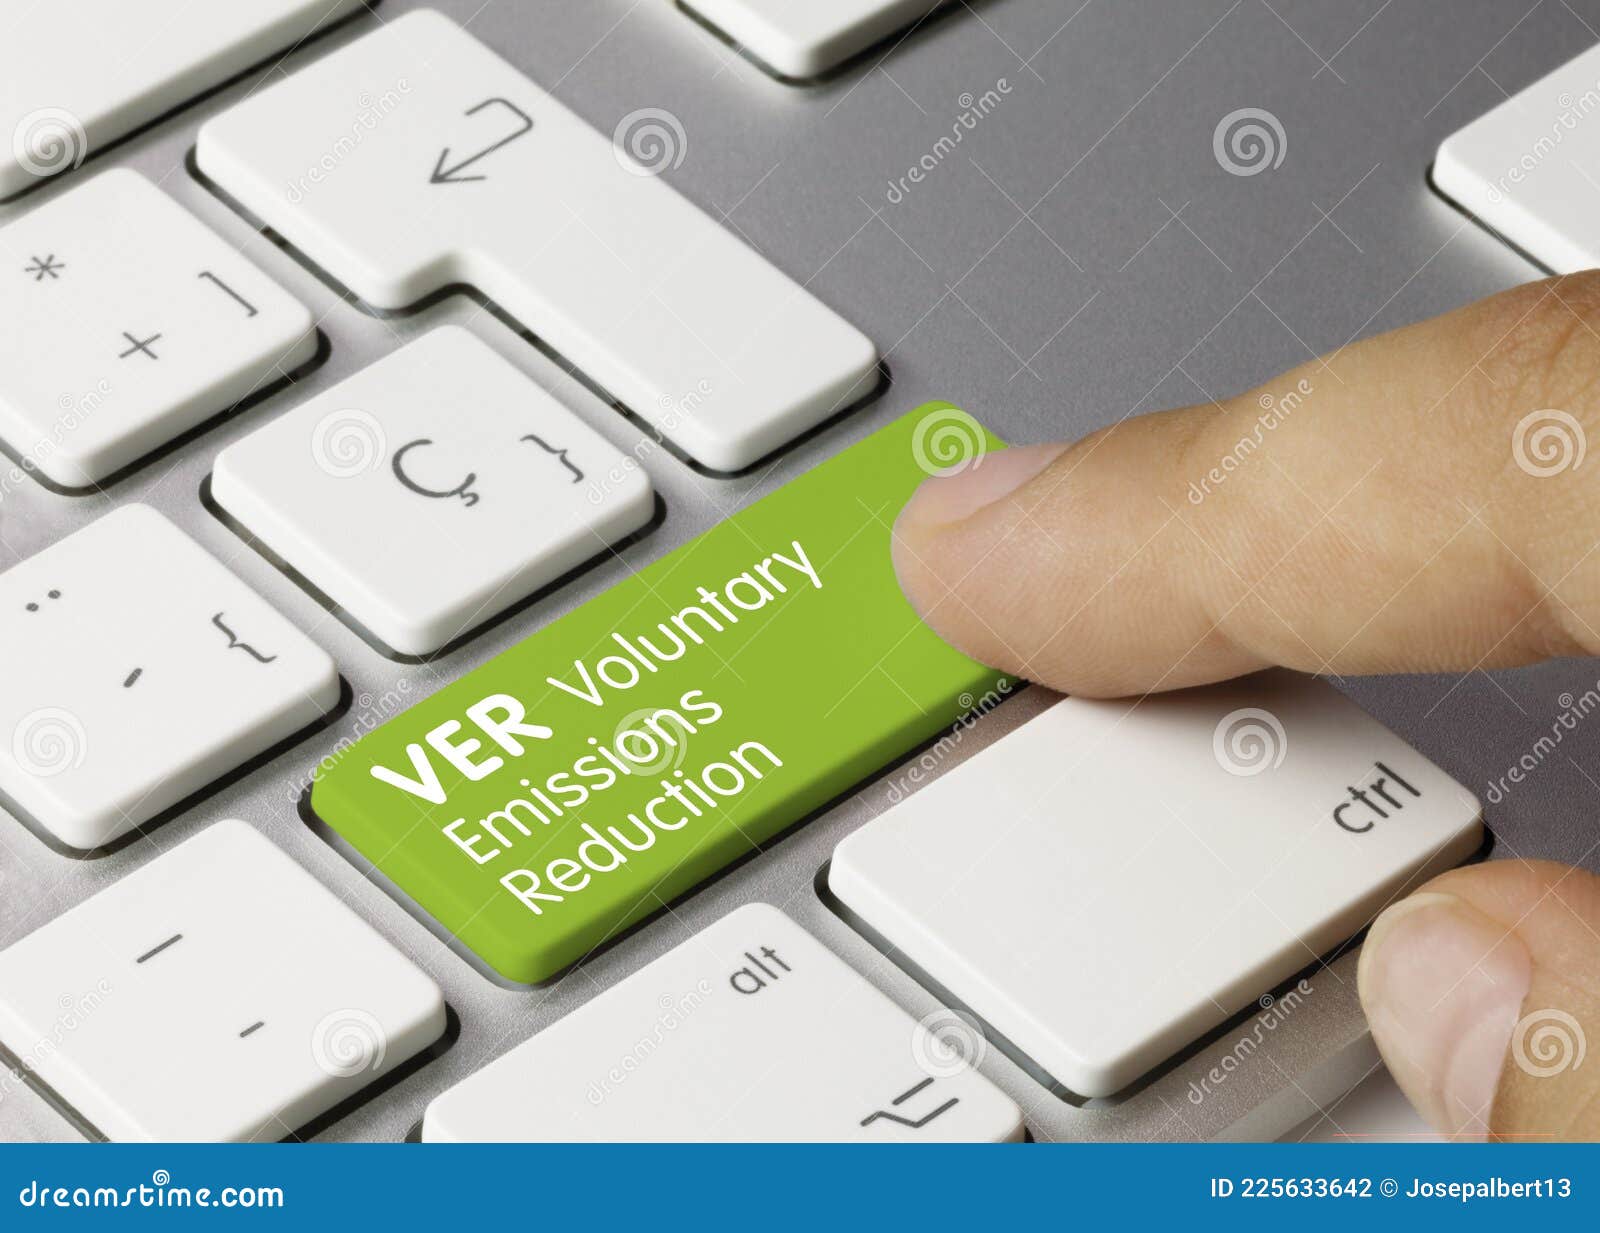 ver voluntary emissions reduction - inscription on green keyboard key